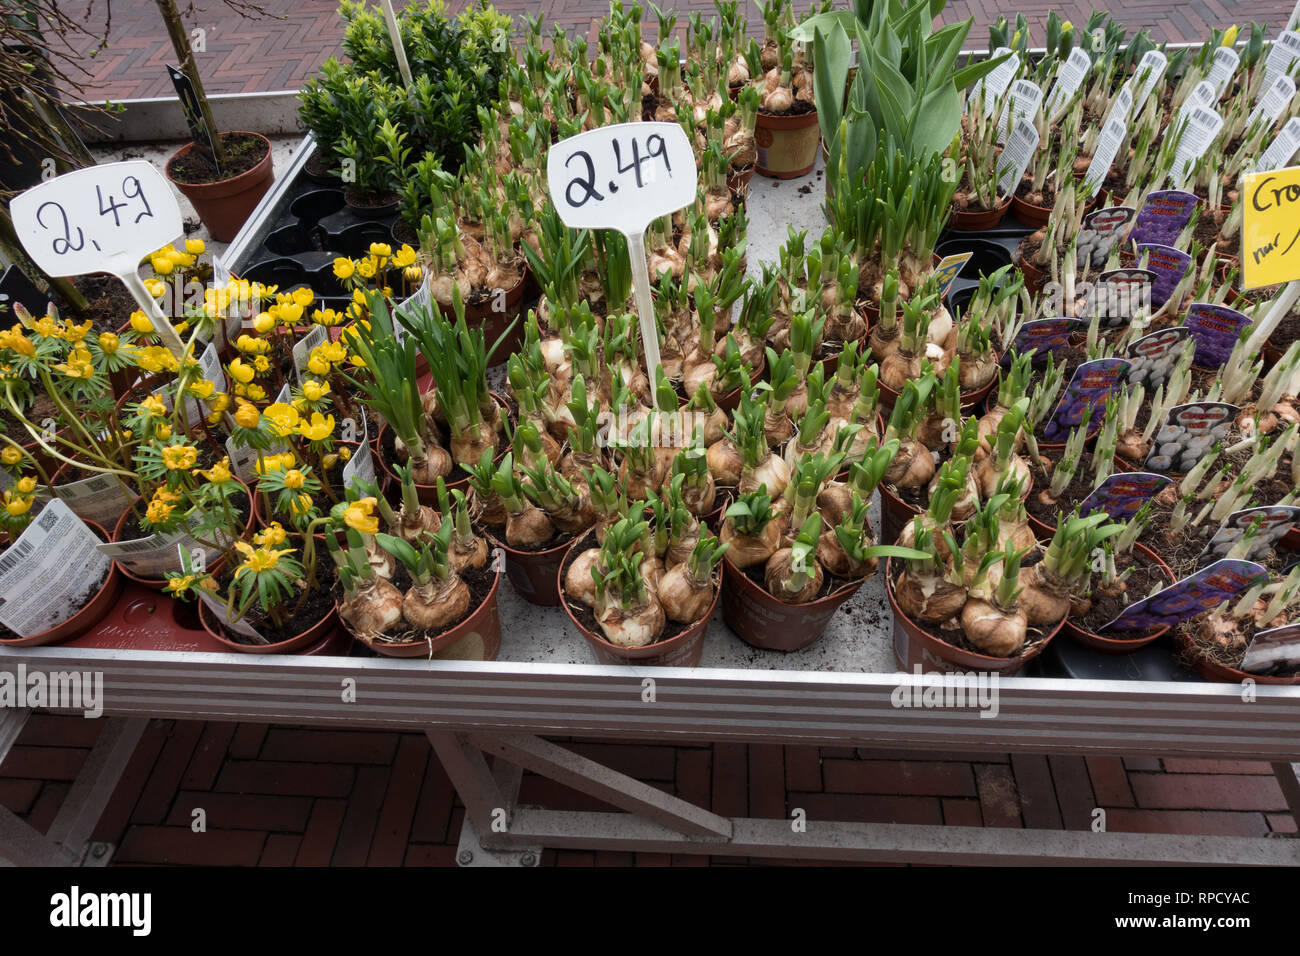 Spring Plants For Sale Outside Shop Norden East Frisia Lower